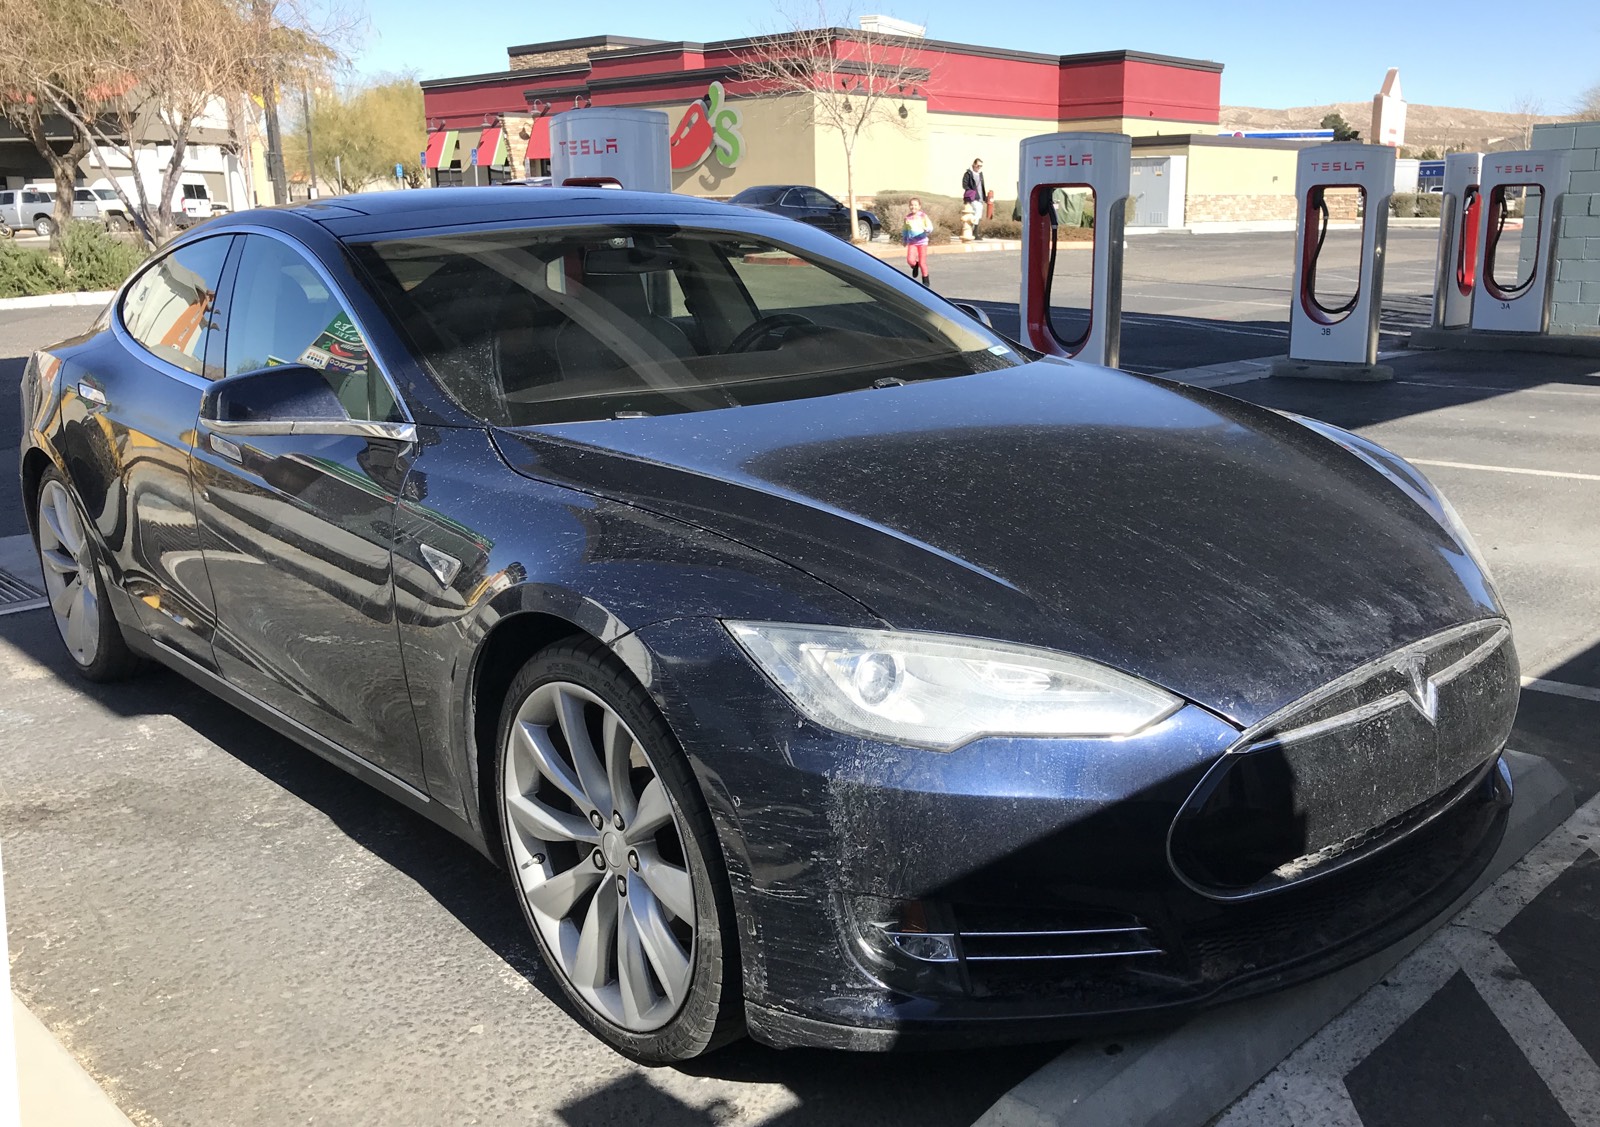 Barstow Tesla Supercharger